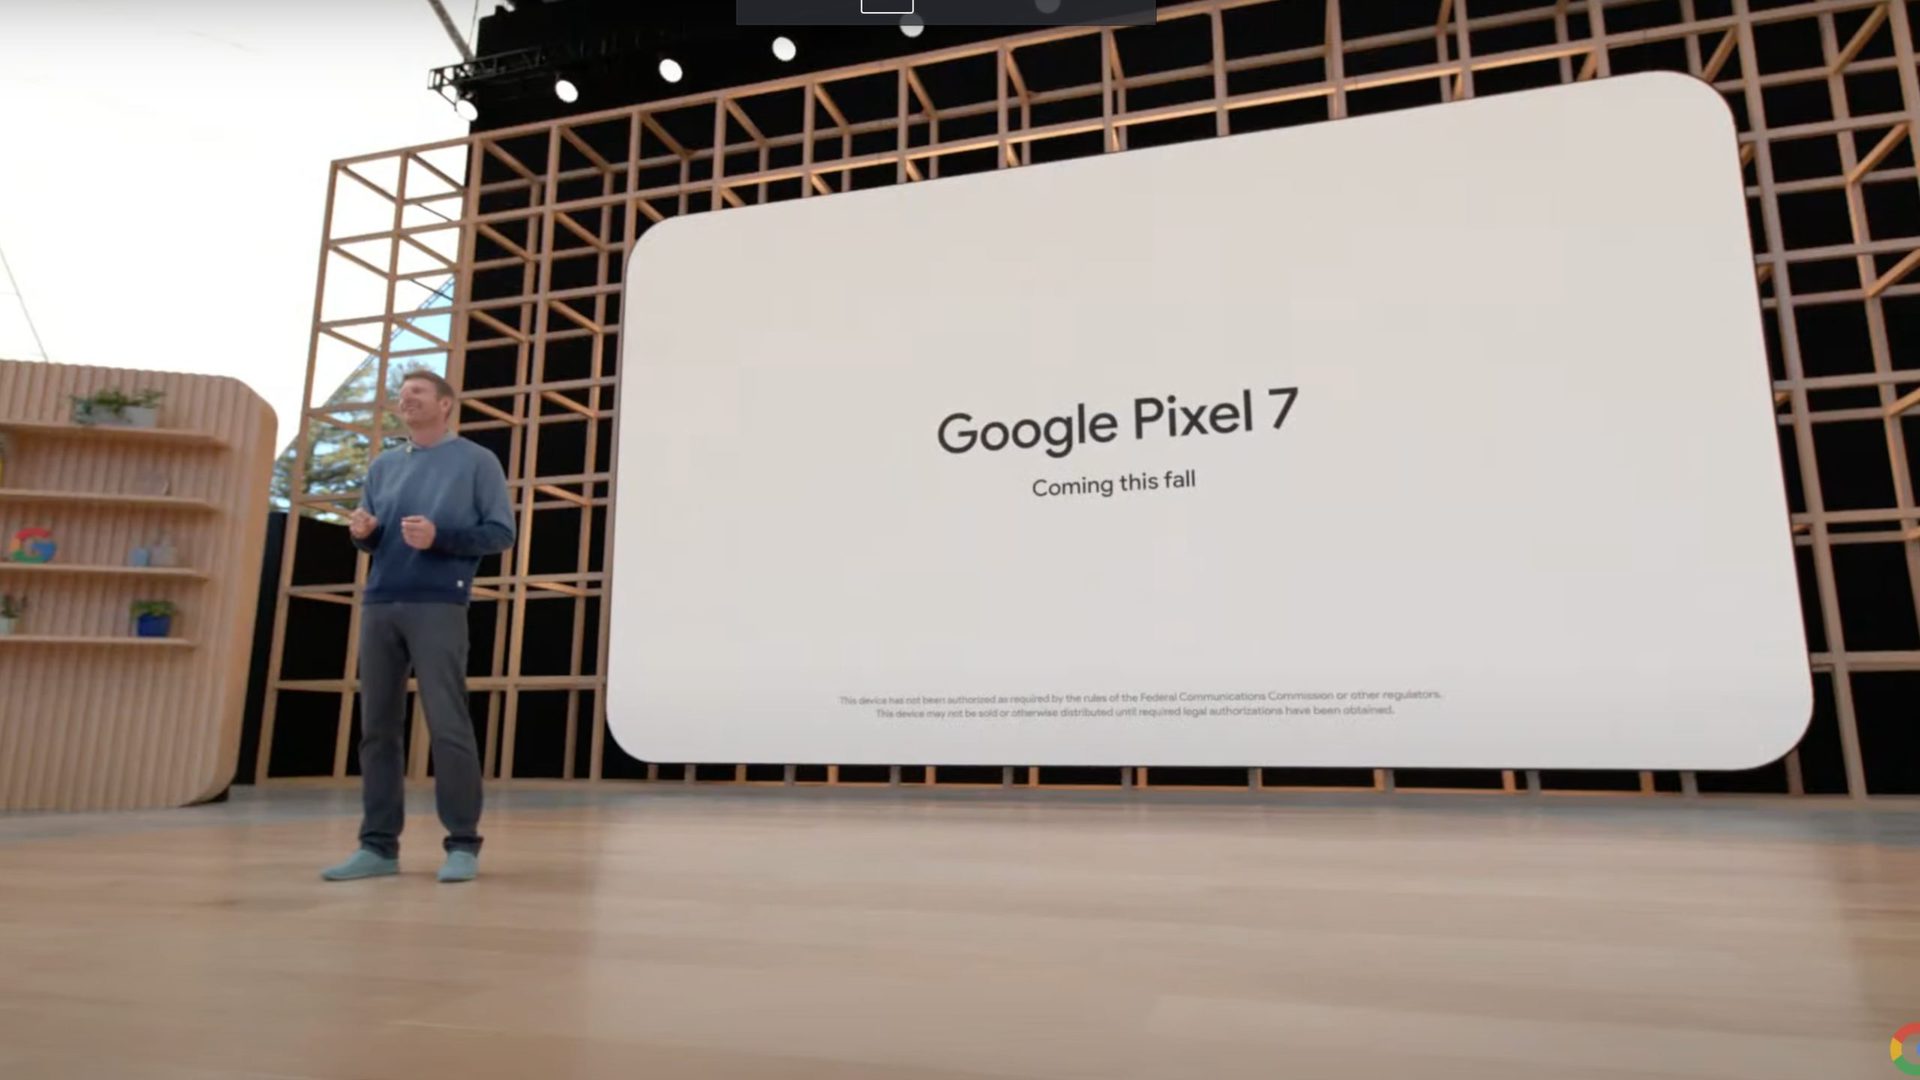 Google Pixel 7 announcement